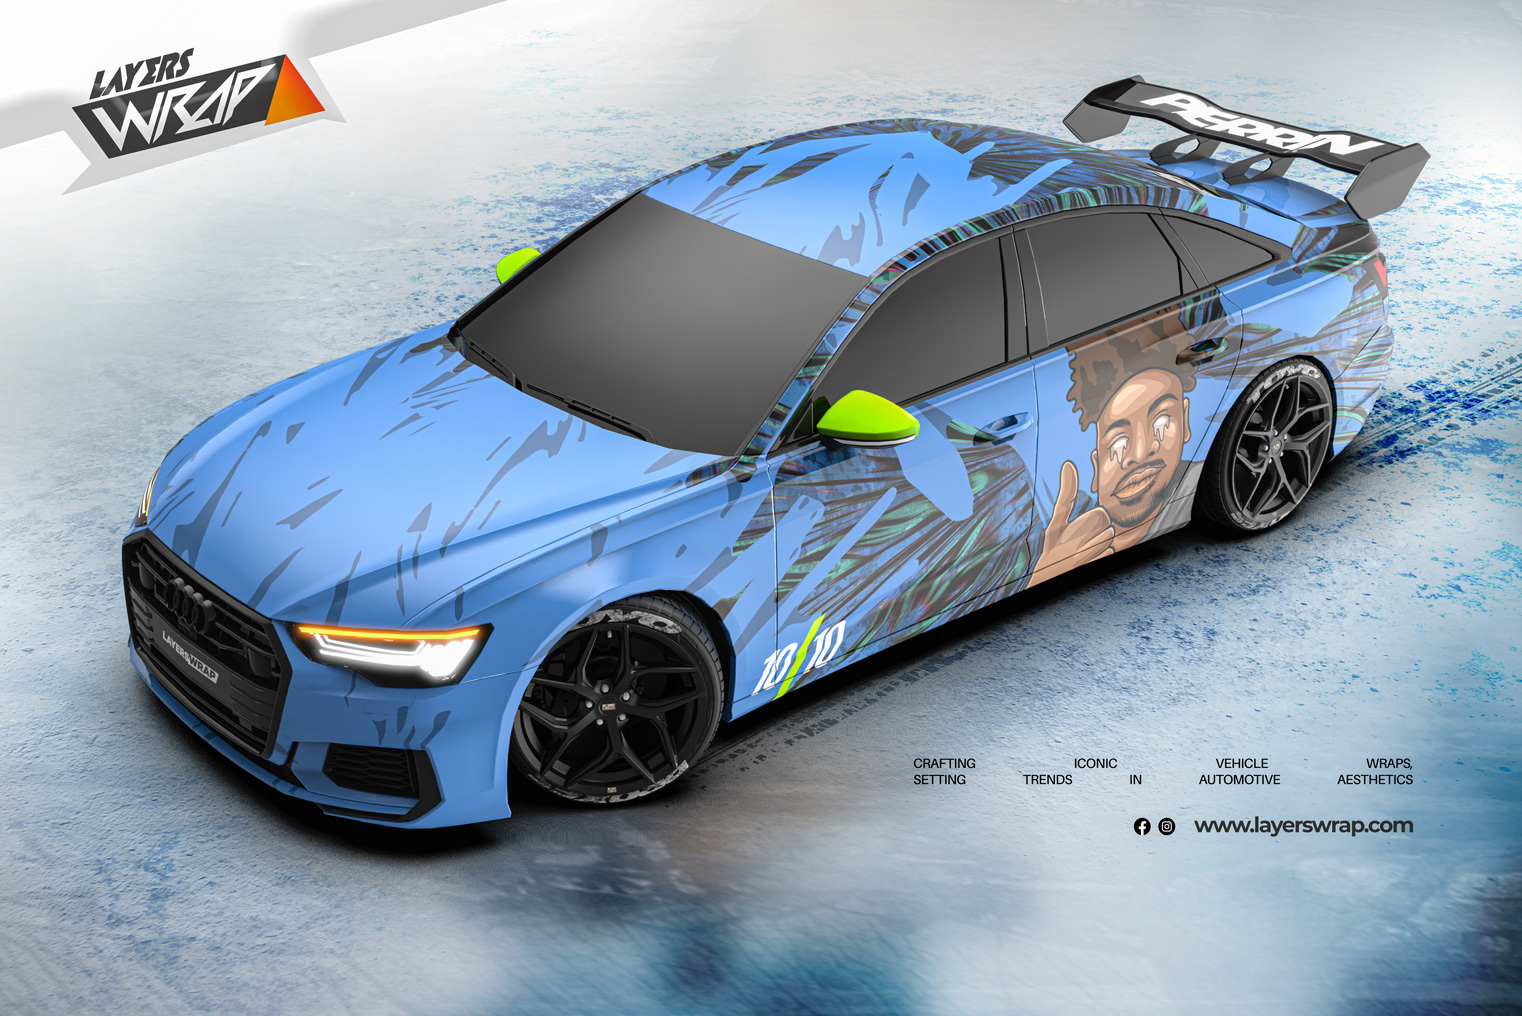 Layers Wrap Custom Cartoonized Face and Livery Design Audi A6